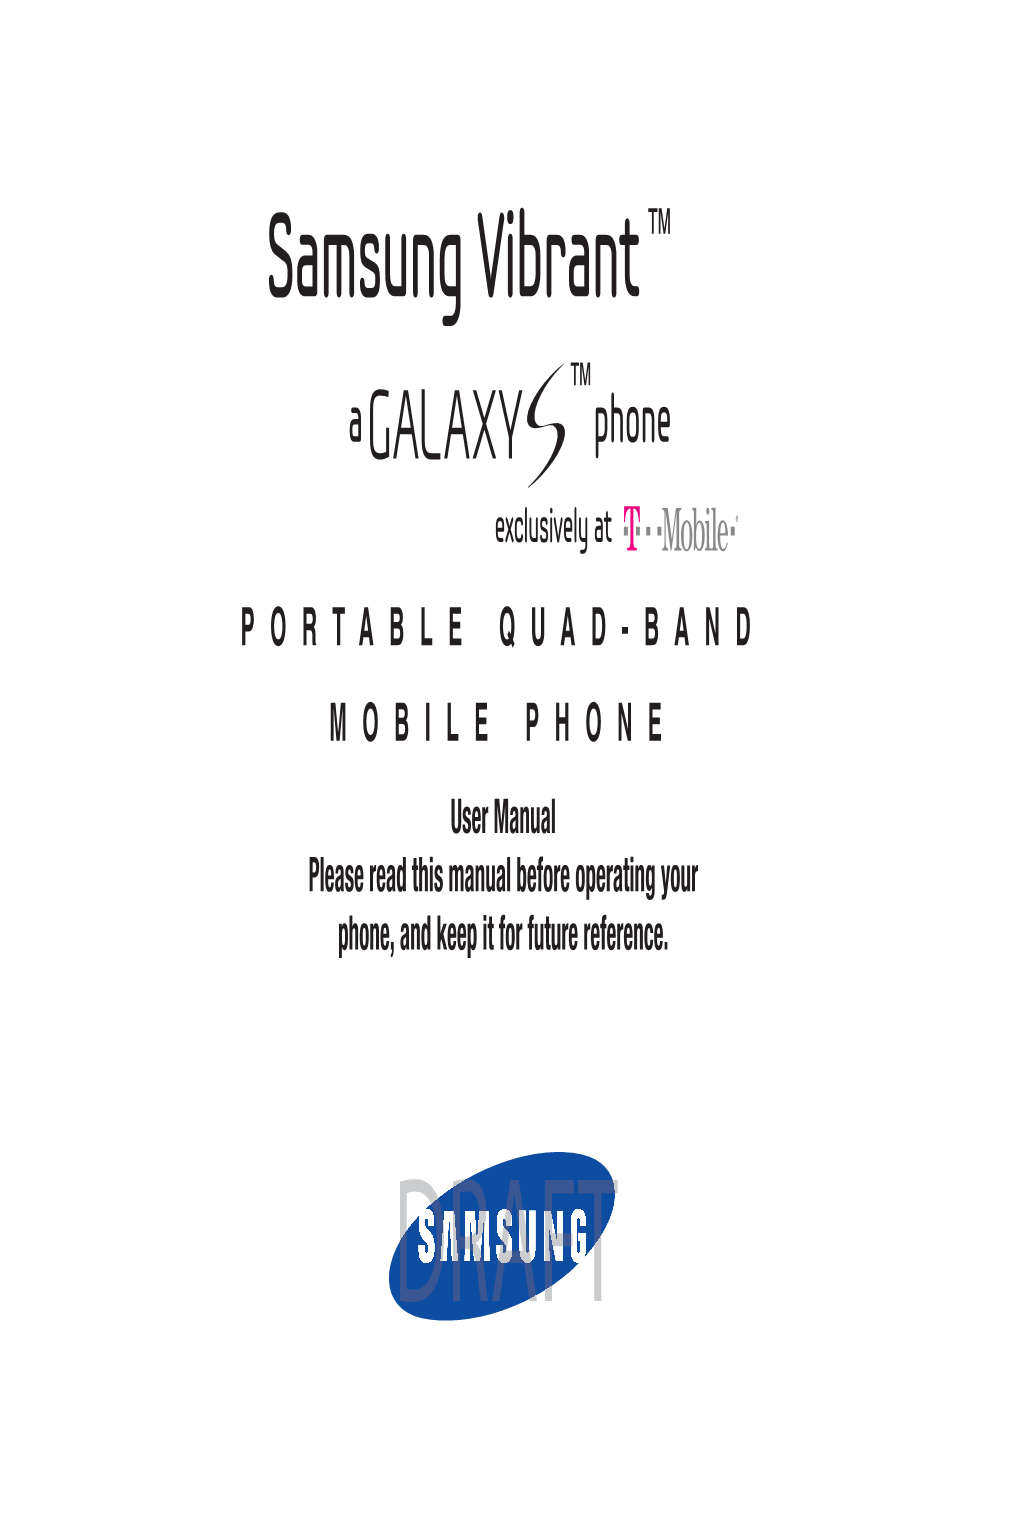 Samsung Vibrant Manual